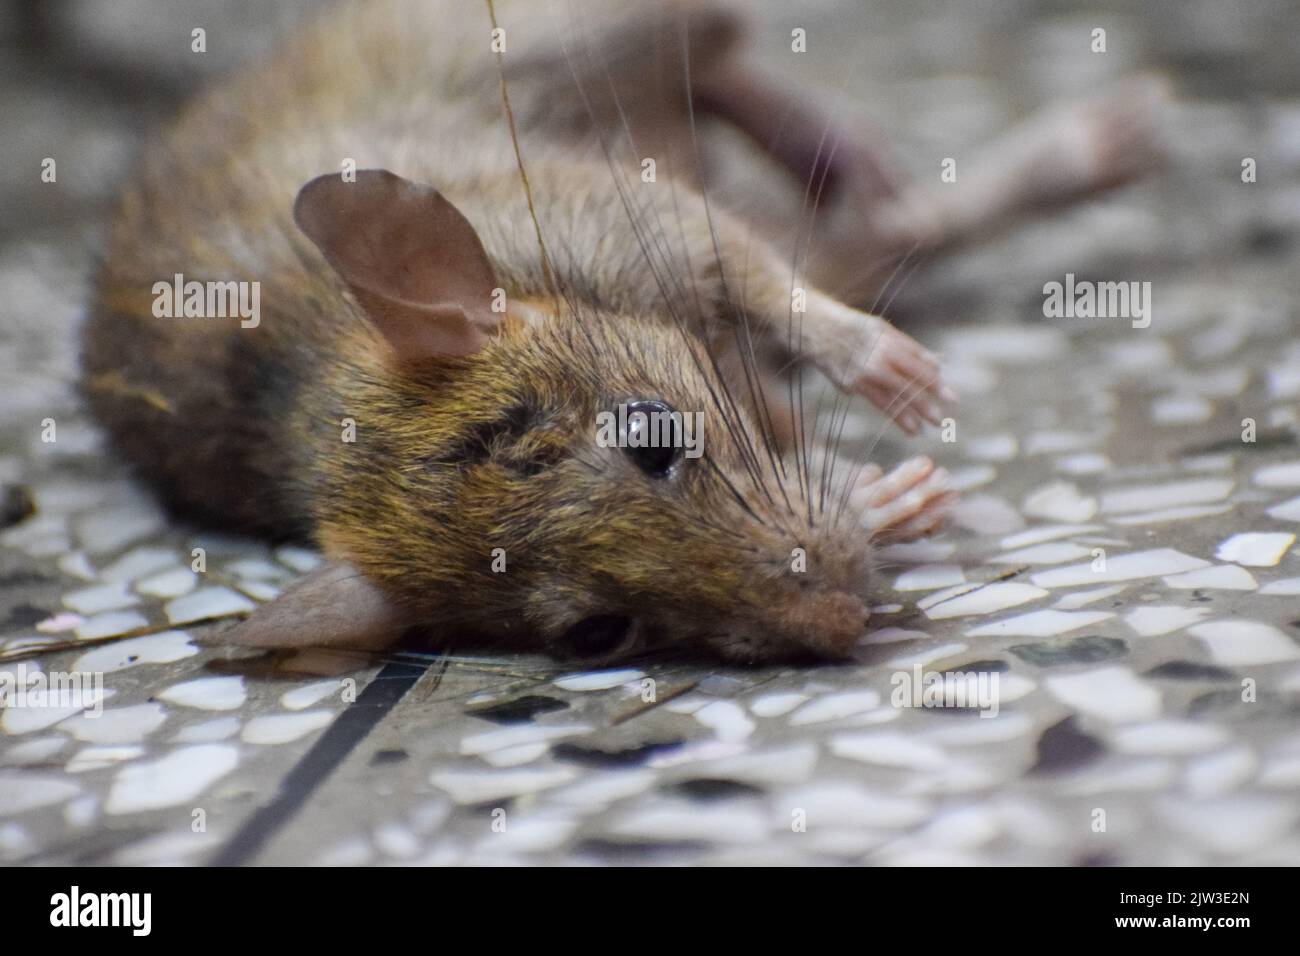 Dead rat is lying on floor. Stock Photo